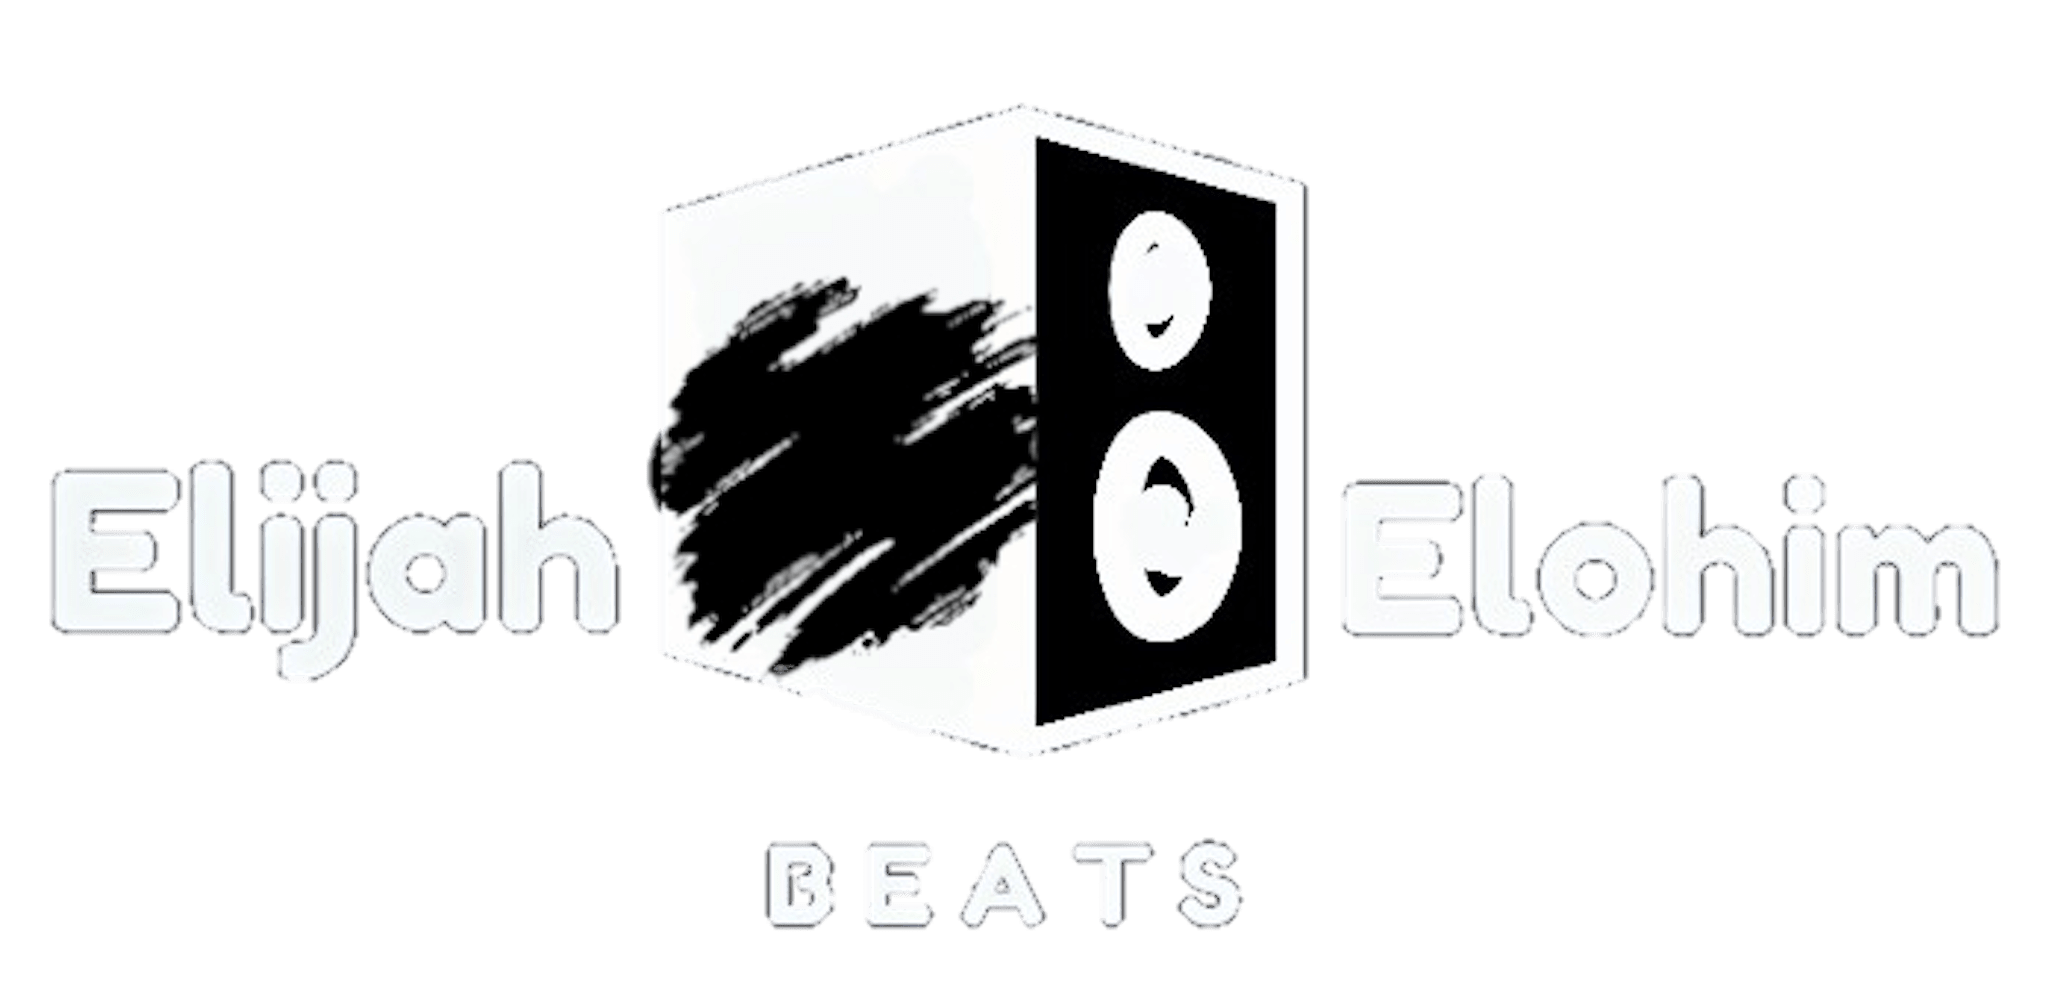 Elijah Elohim Beats